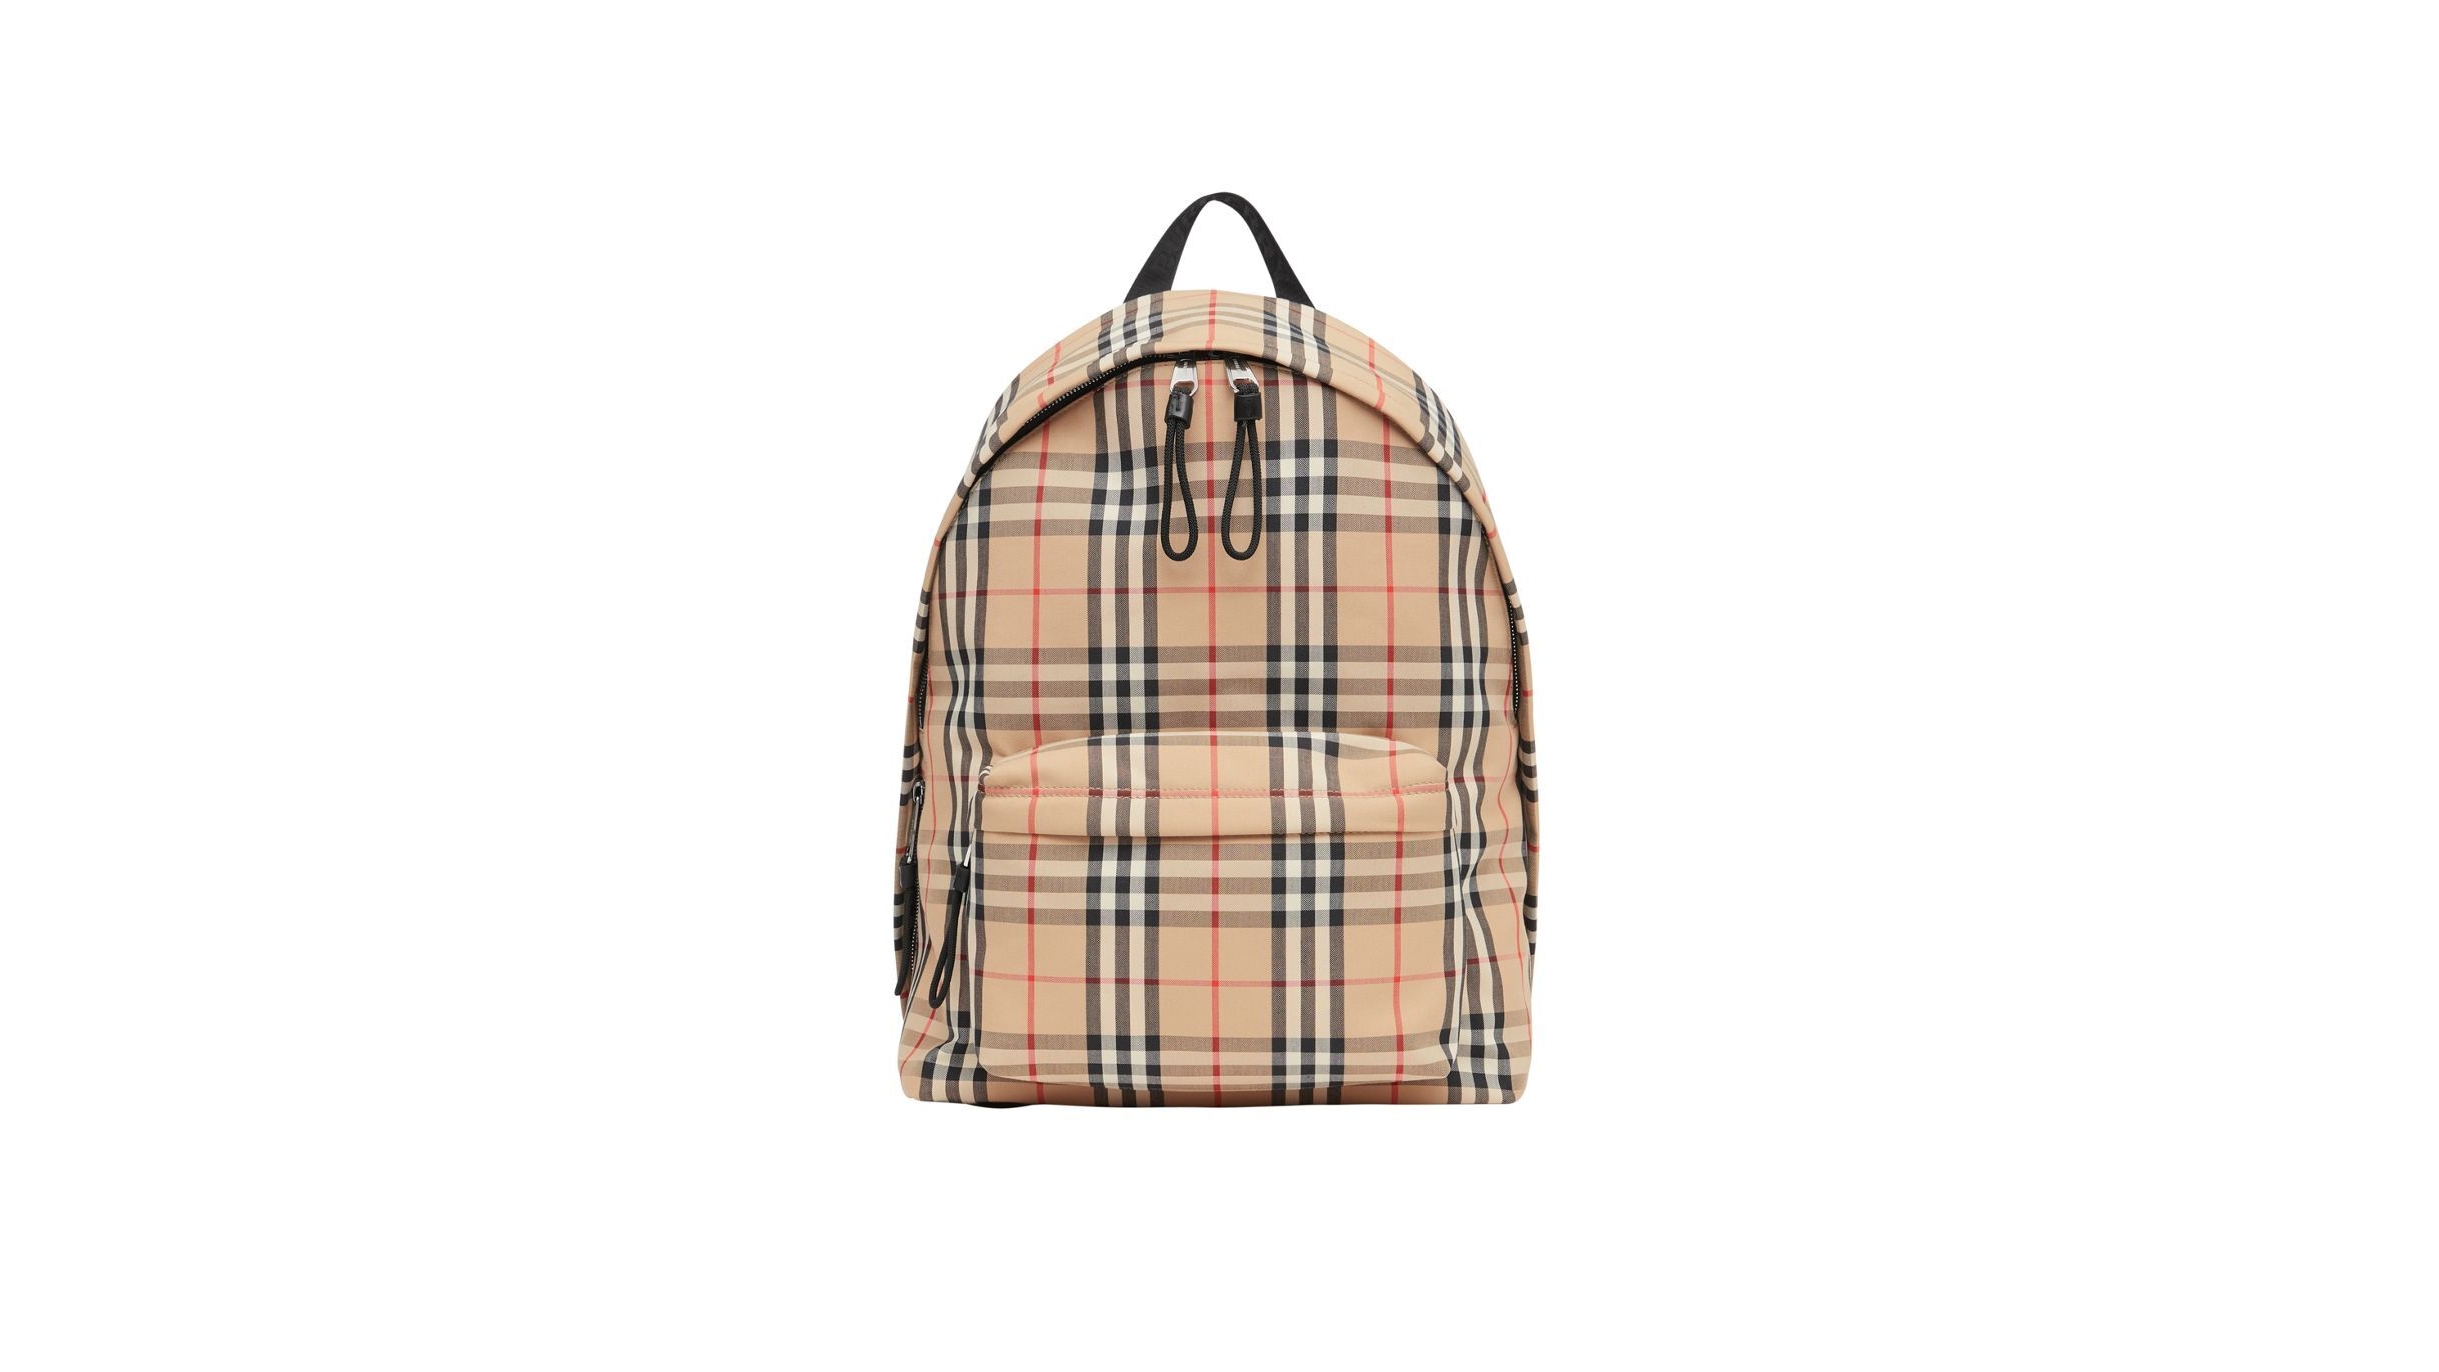 Burberry Vintage check nylon backpack - Harvey Nichols